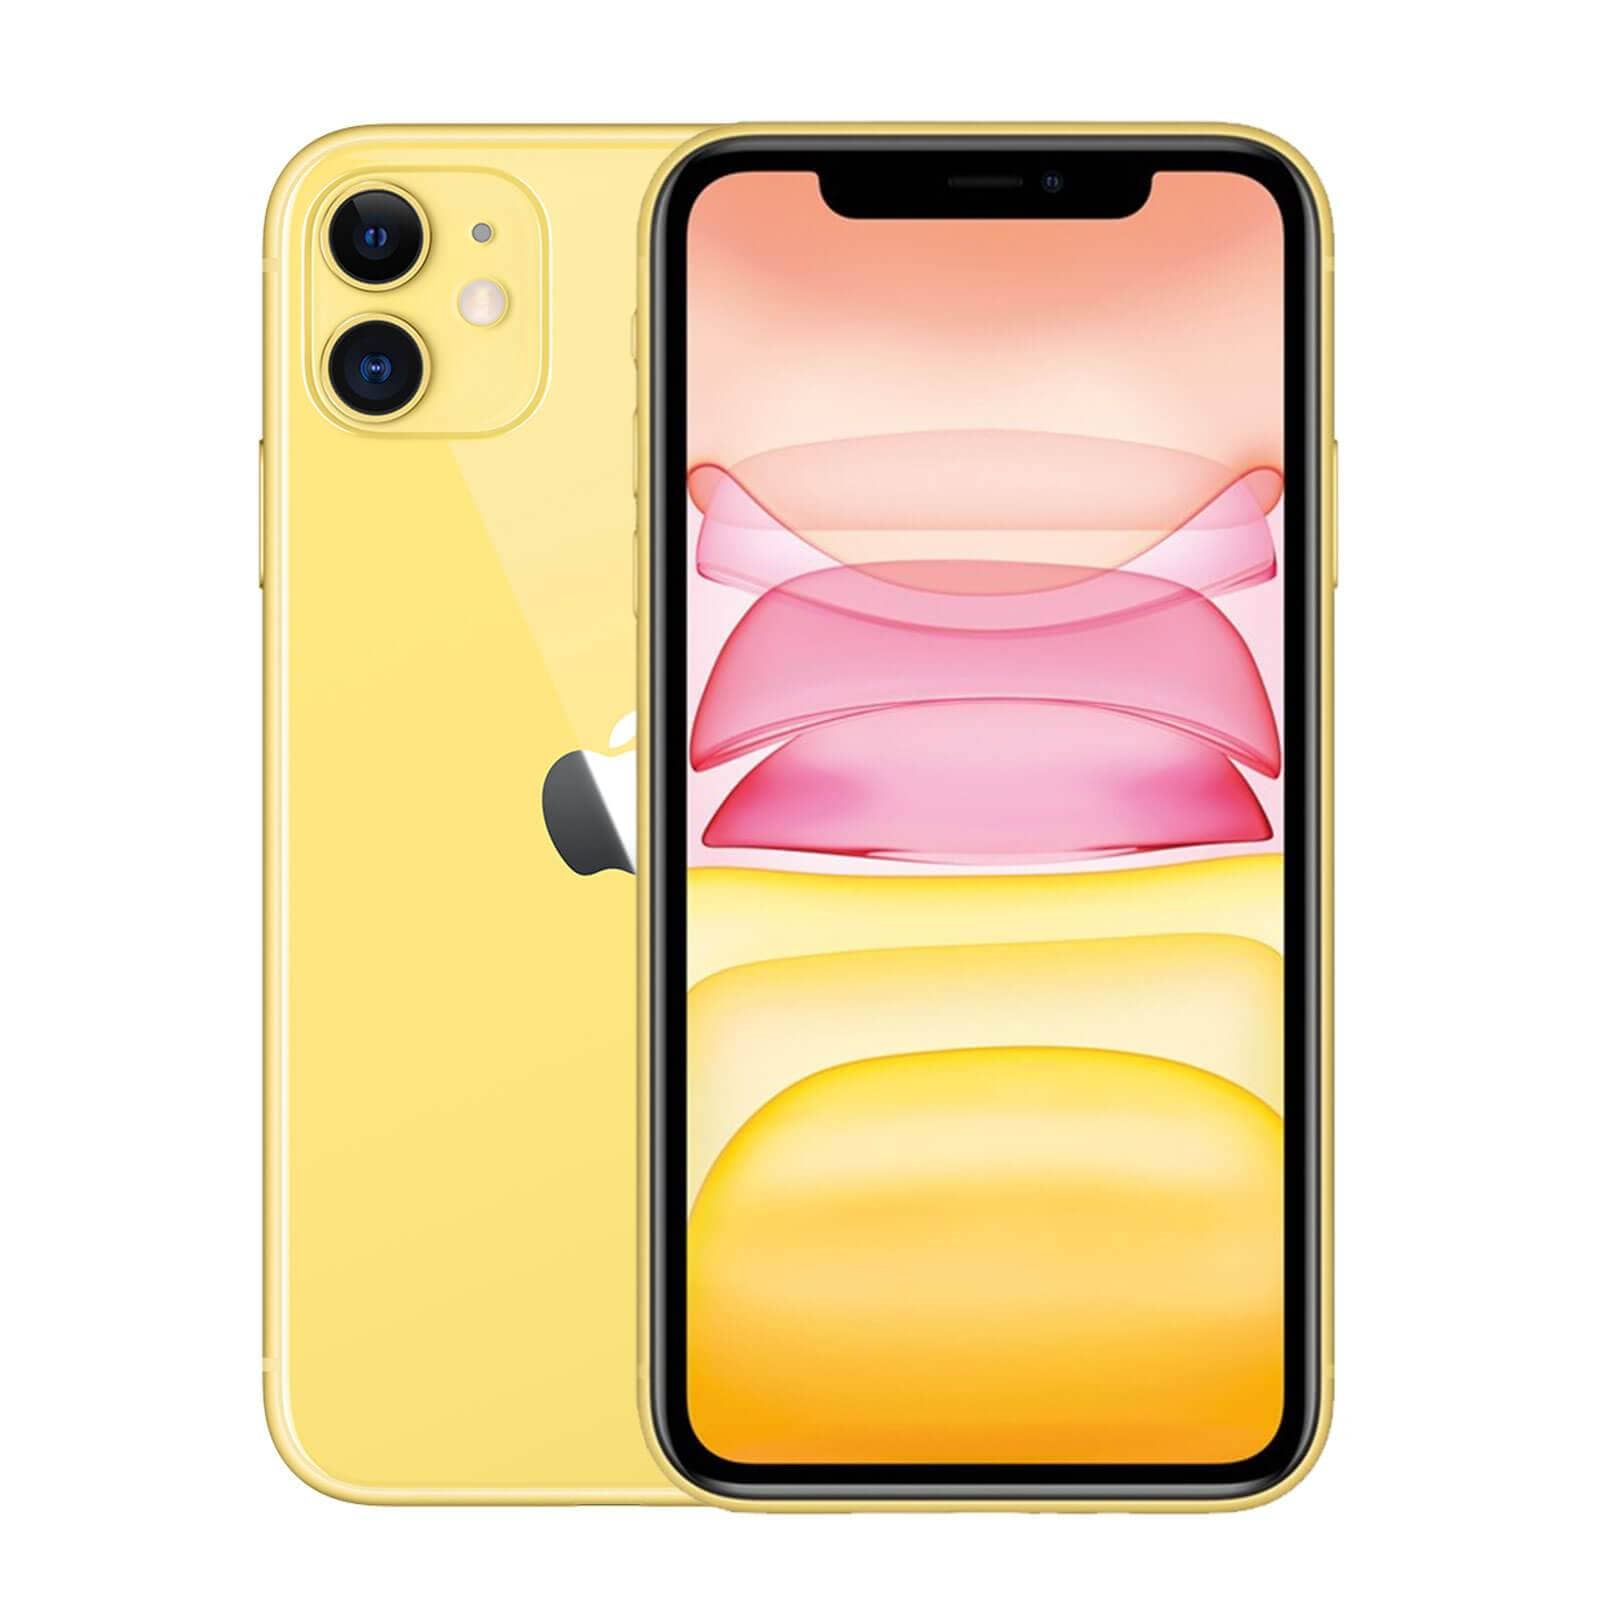 Apple iPhone 11 64GB Yellow Good - Unlocked 64GB Yellow Good